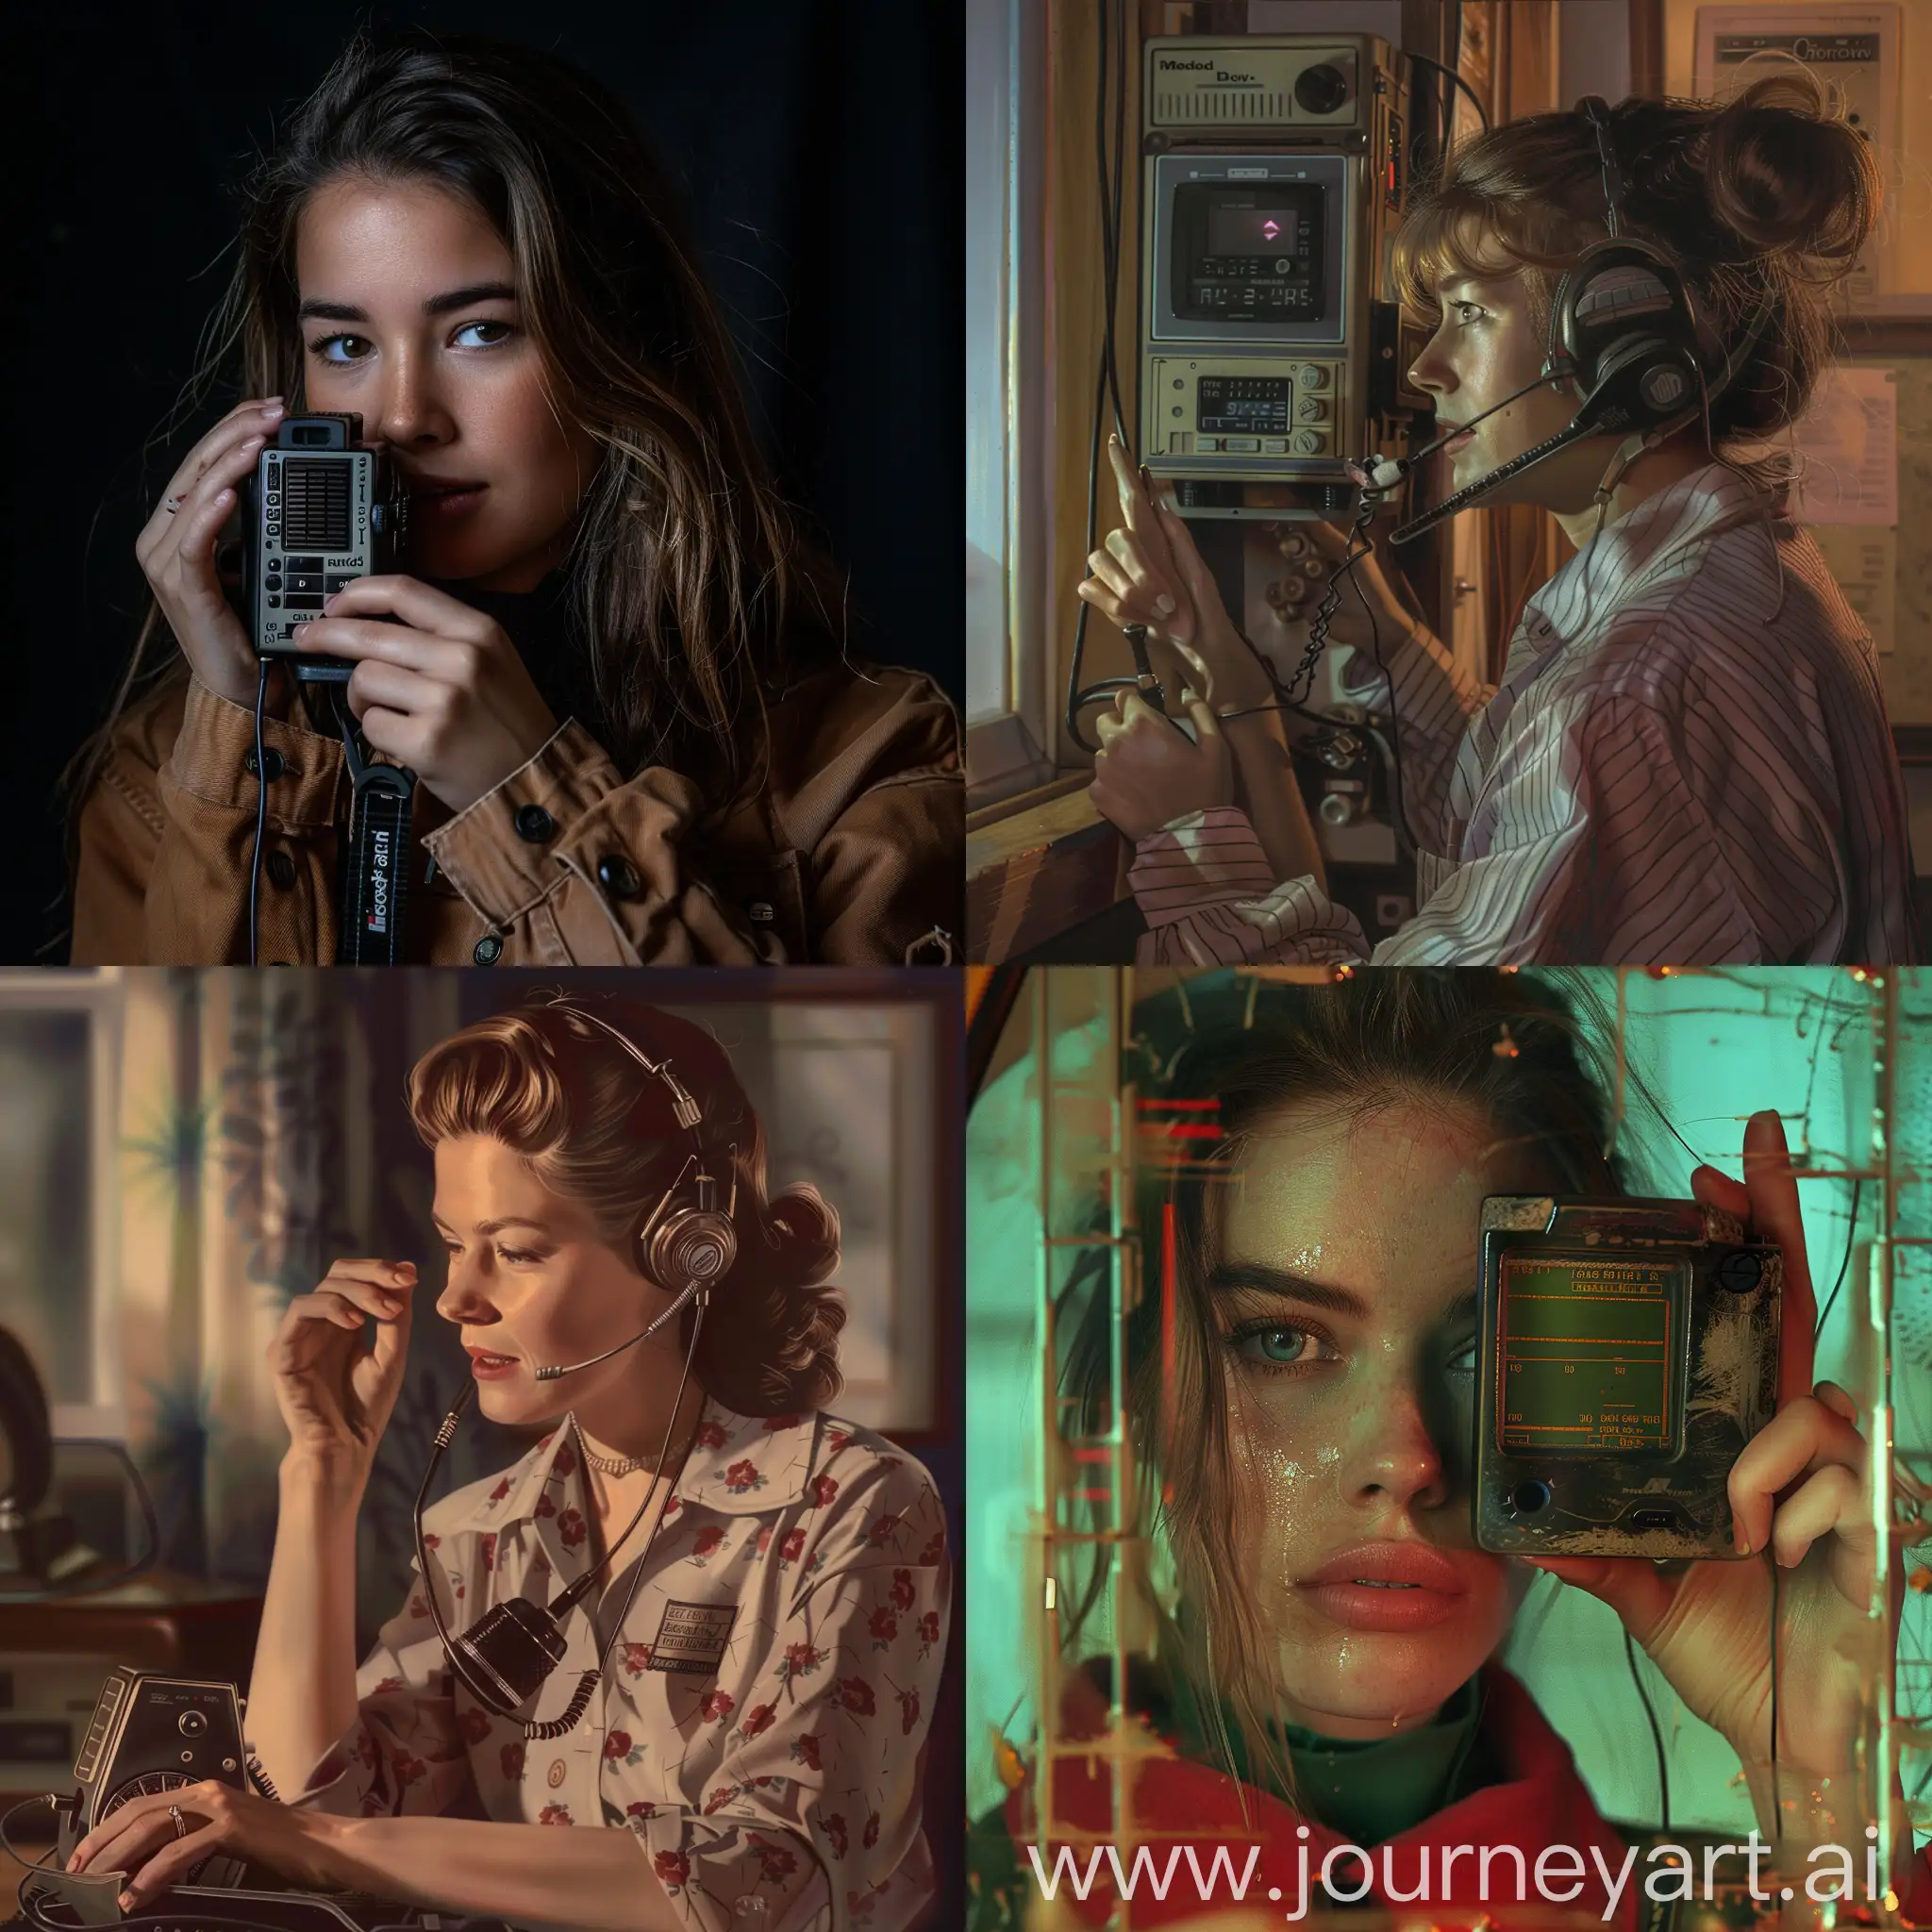 Make a real image of a woman using the Motorola DP450 radio